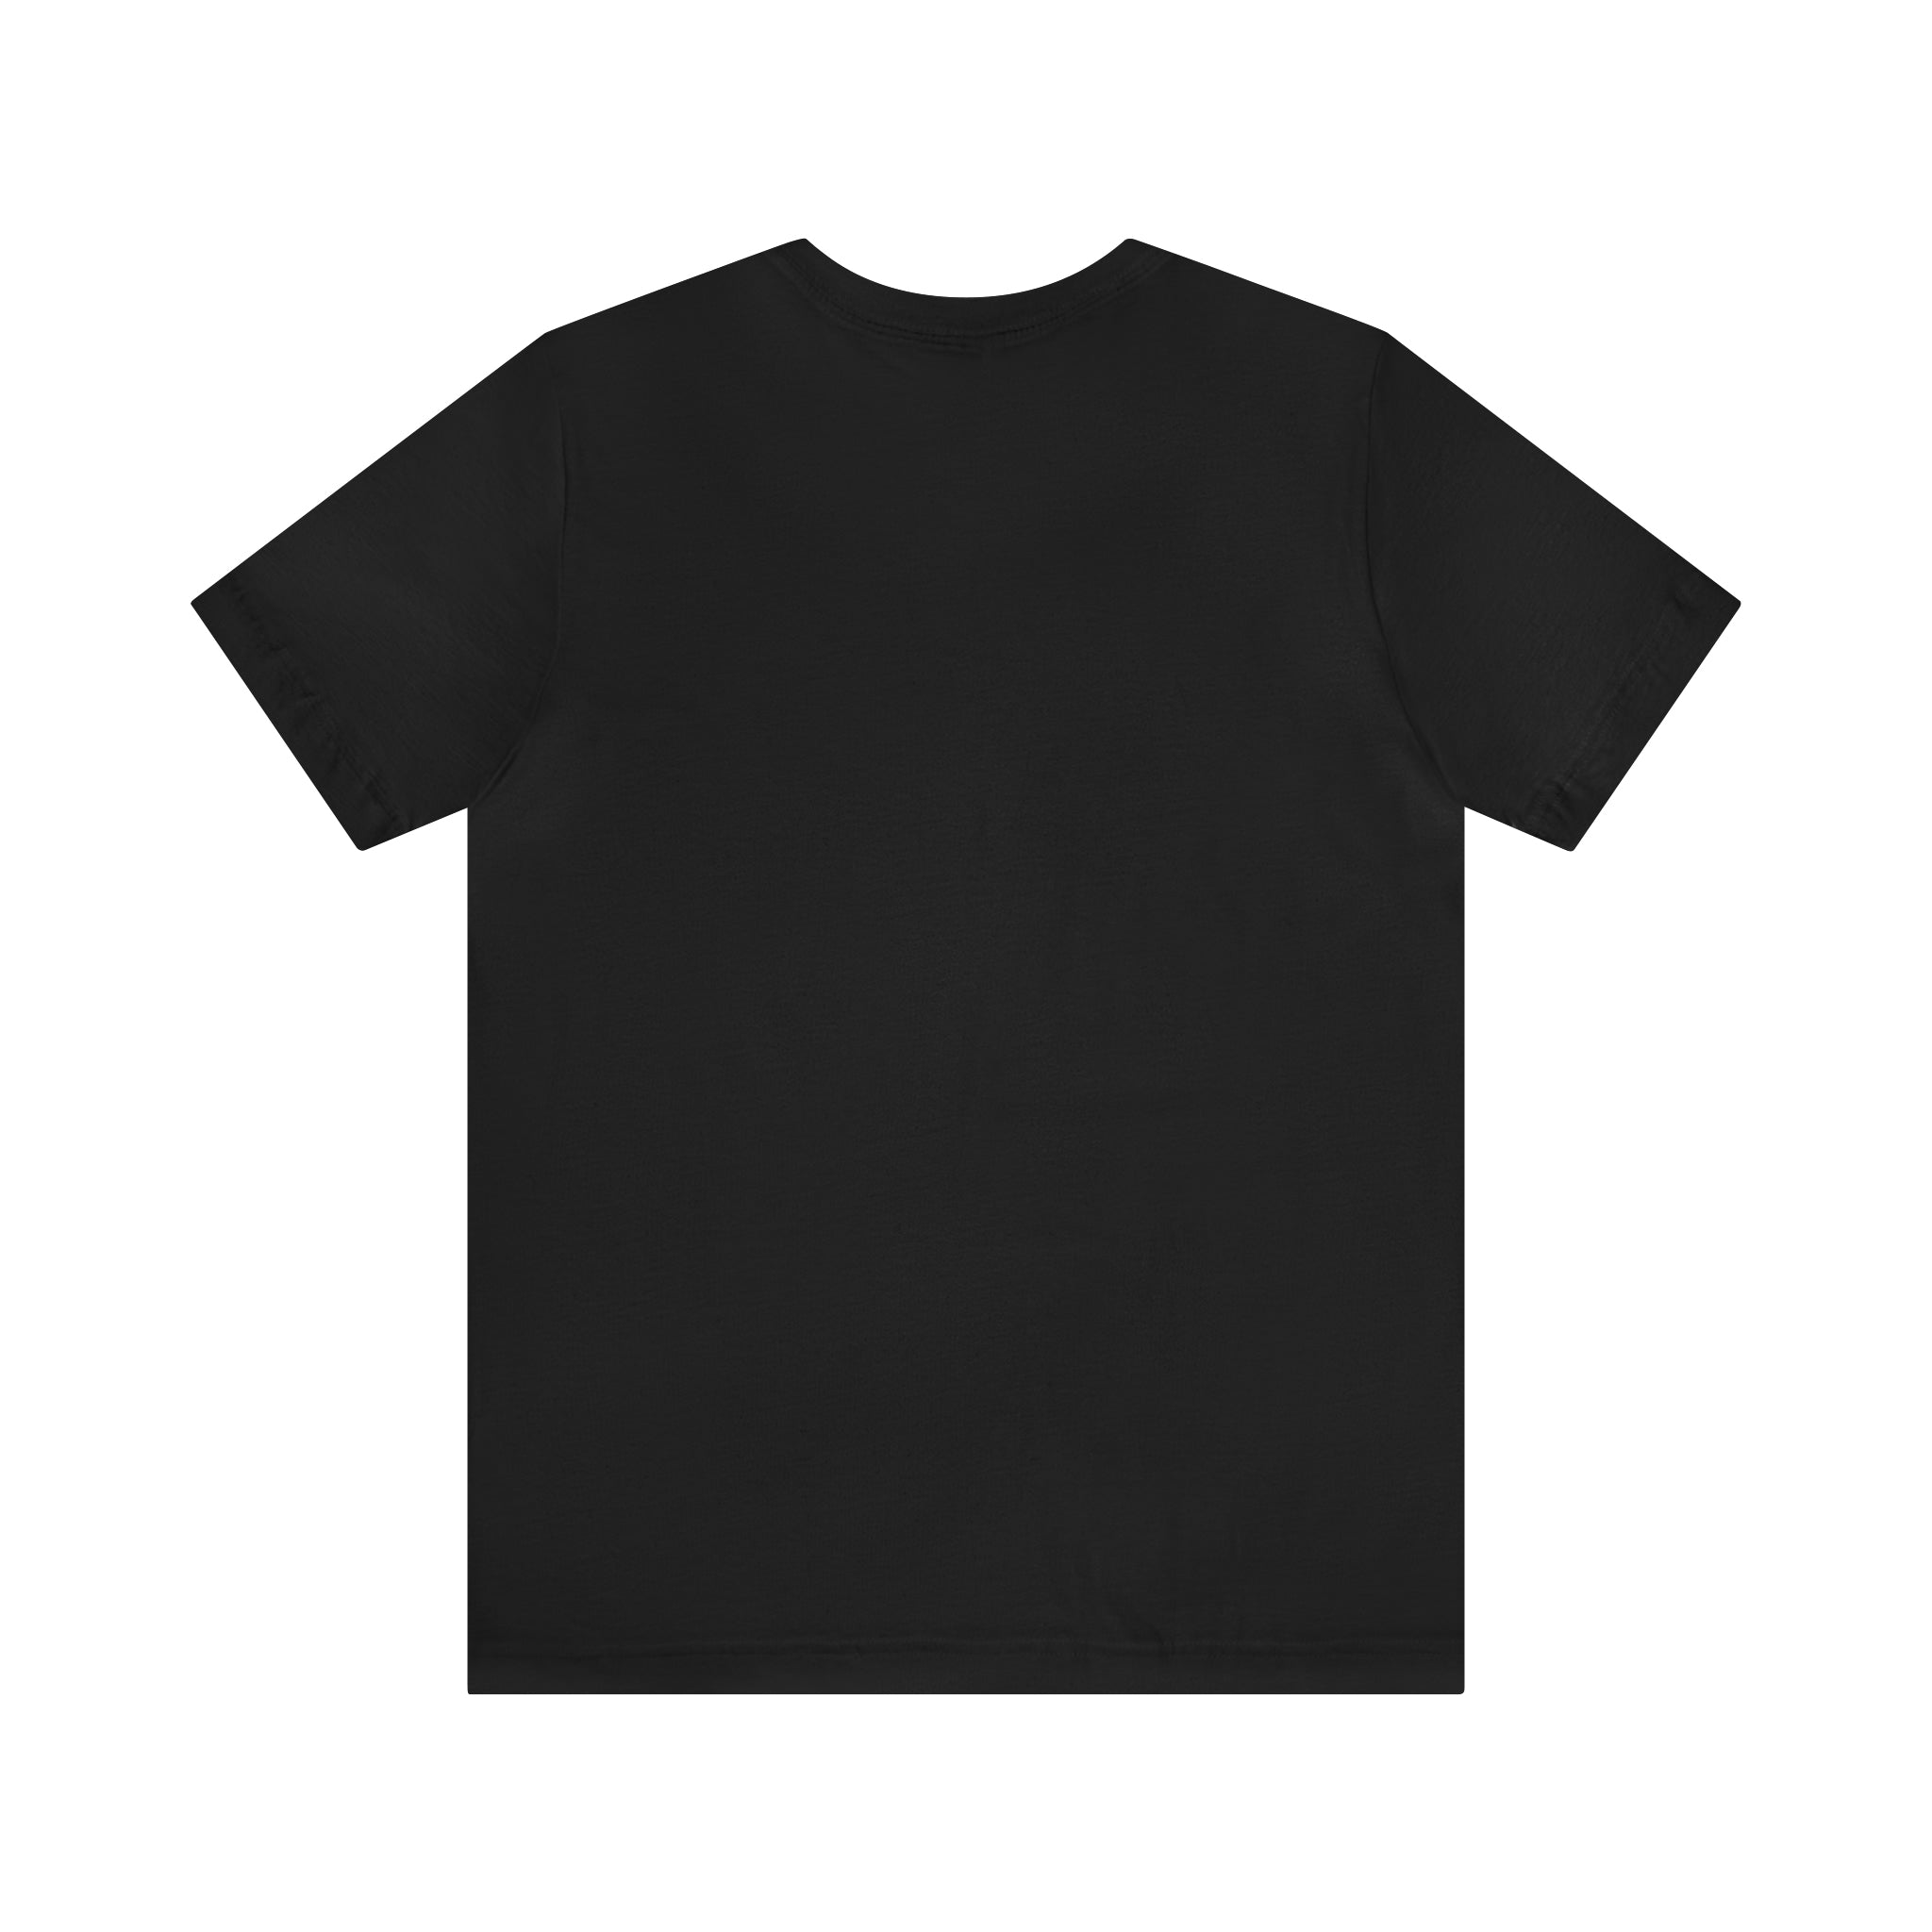 Printify T-Shirt Sweet Ass (Donkey) - Unisex Jersey Short Sleeve Tee